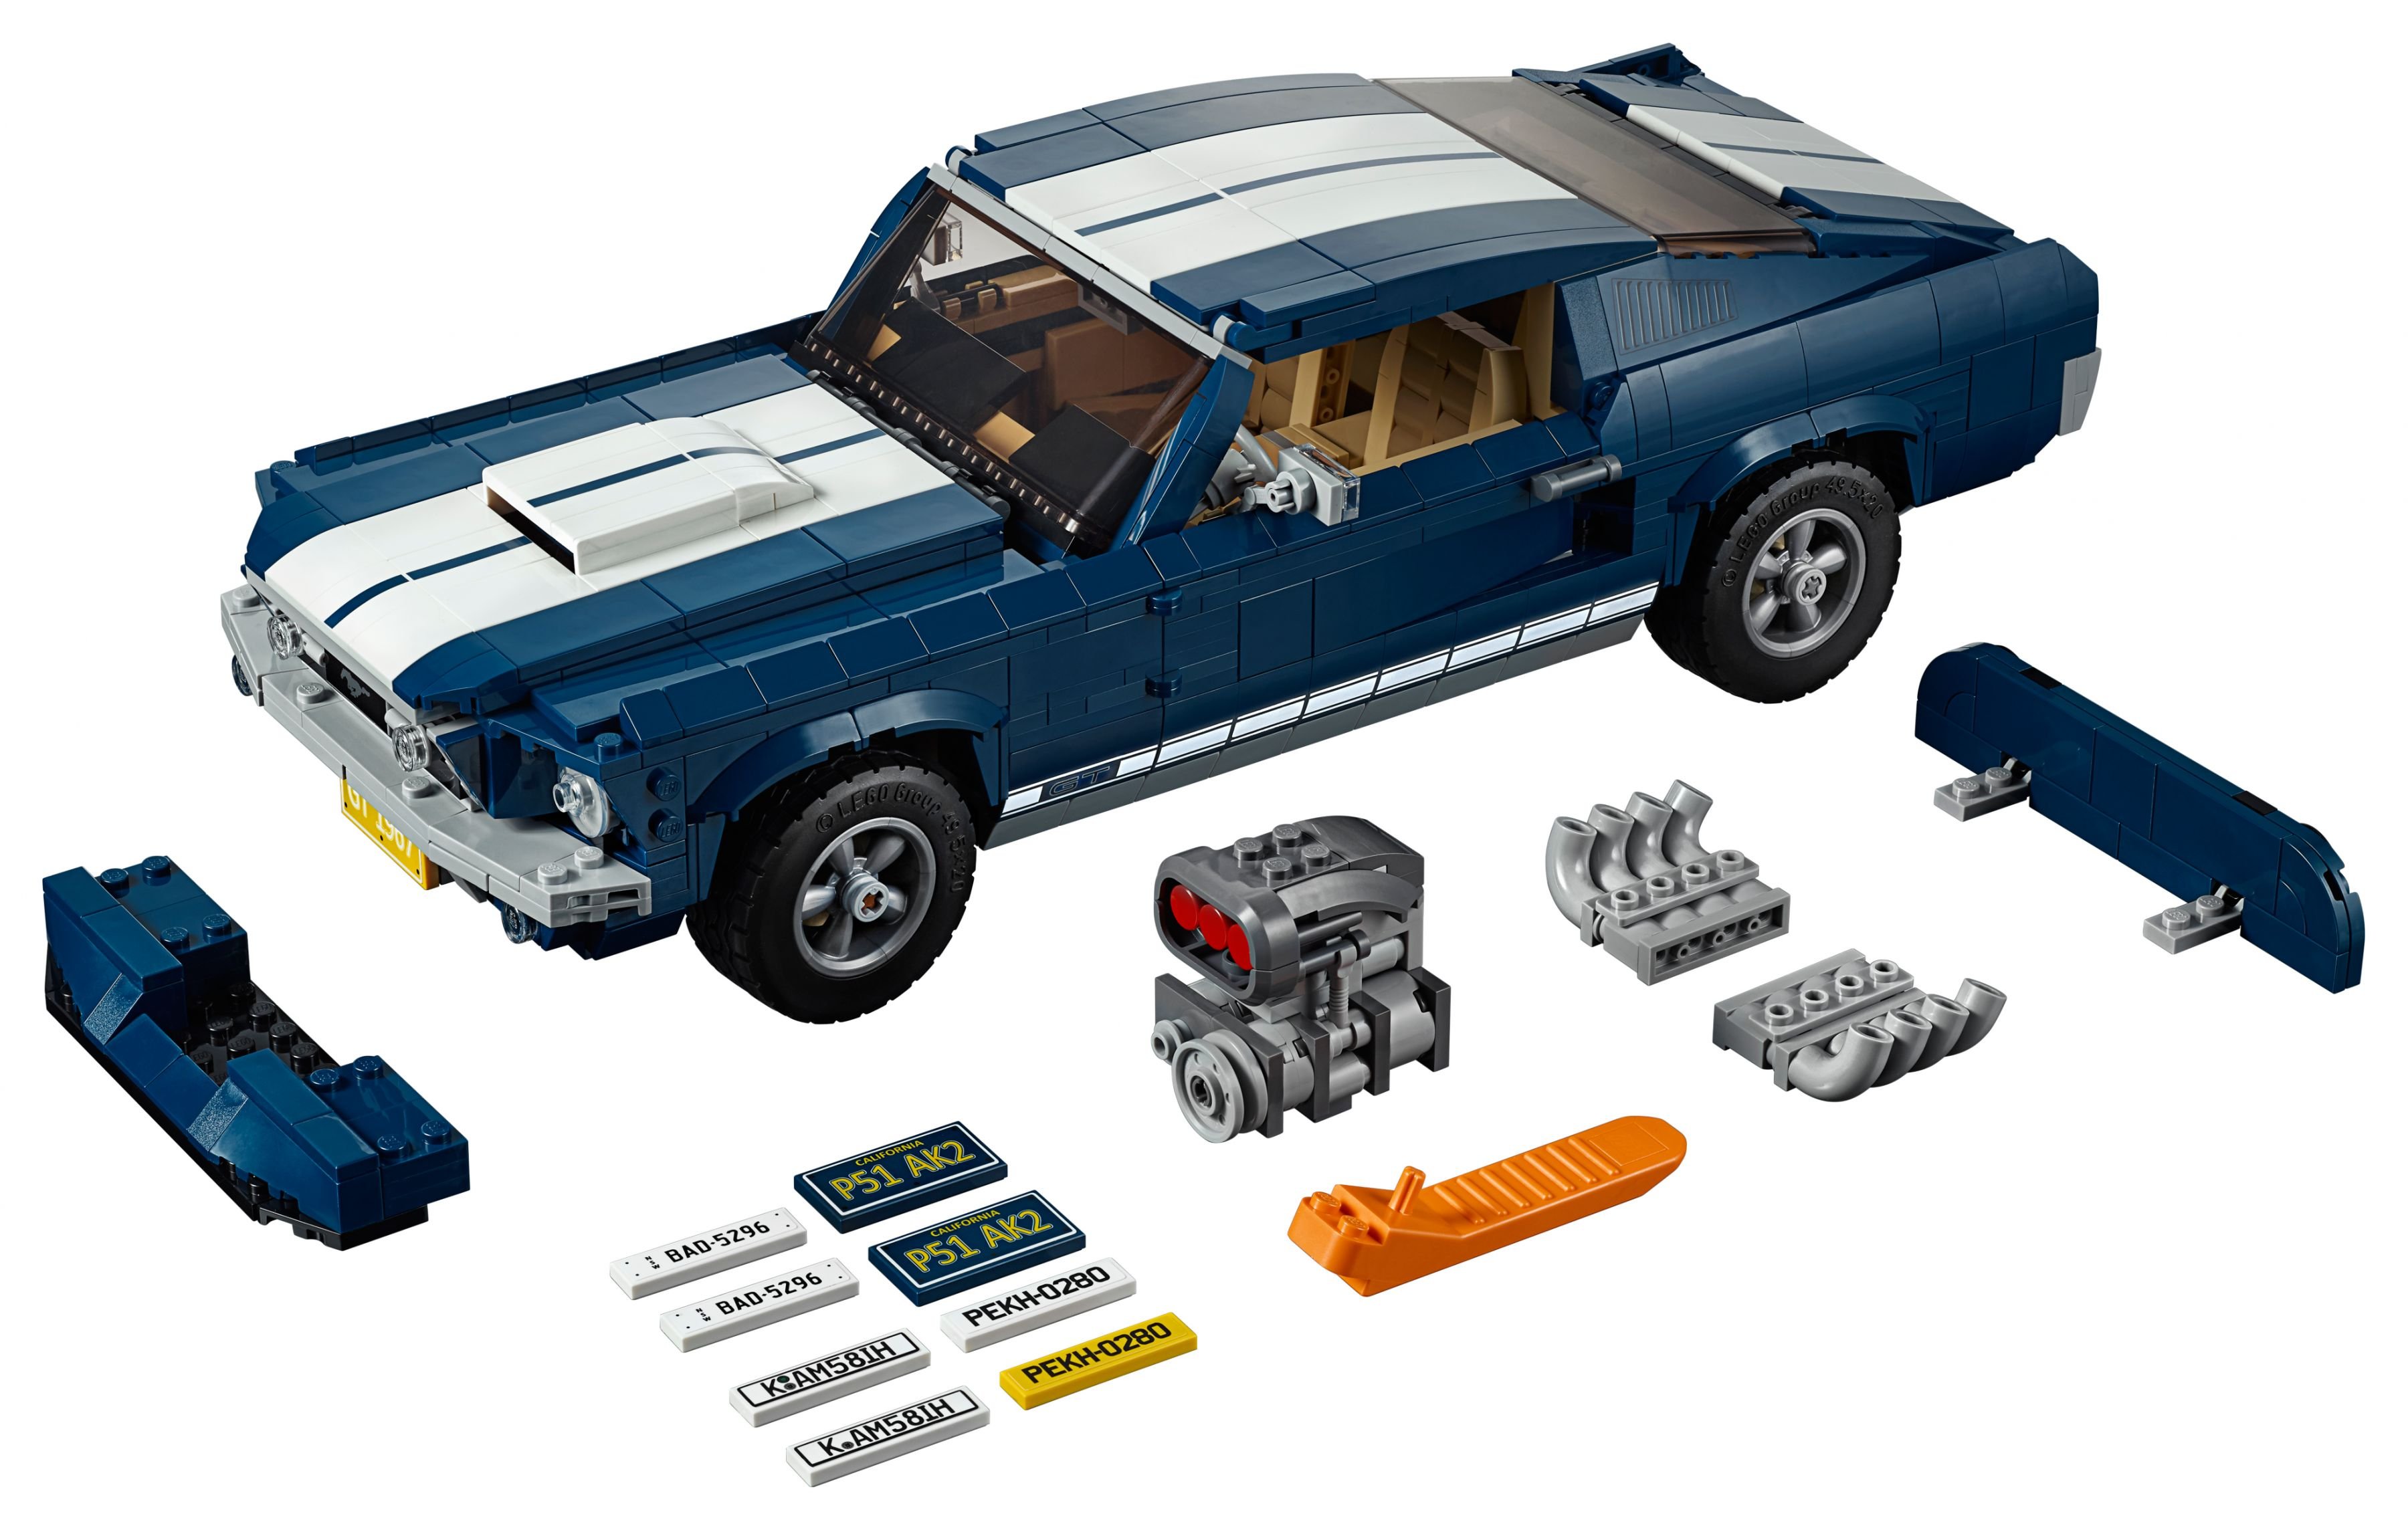 LEGO Advanced Models 10265 Ford Mustang GT LEGO_10265_alt16.jpg